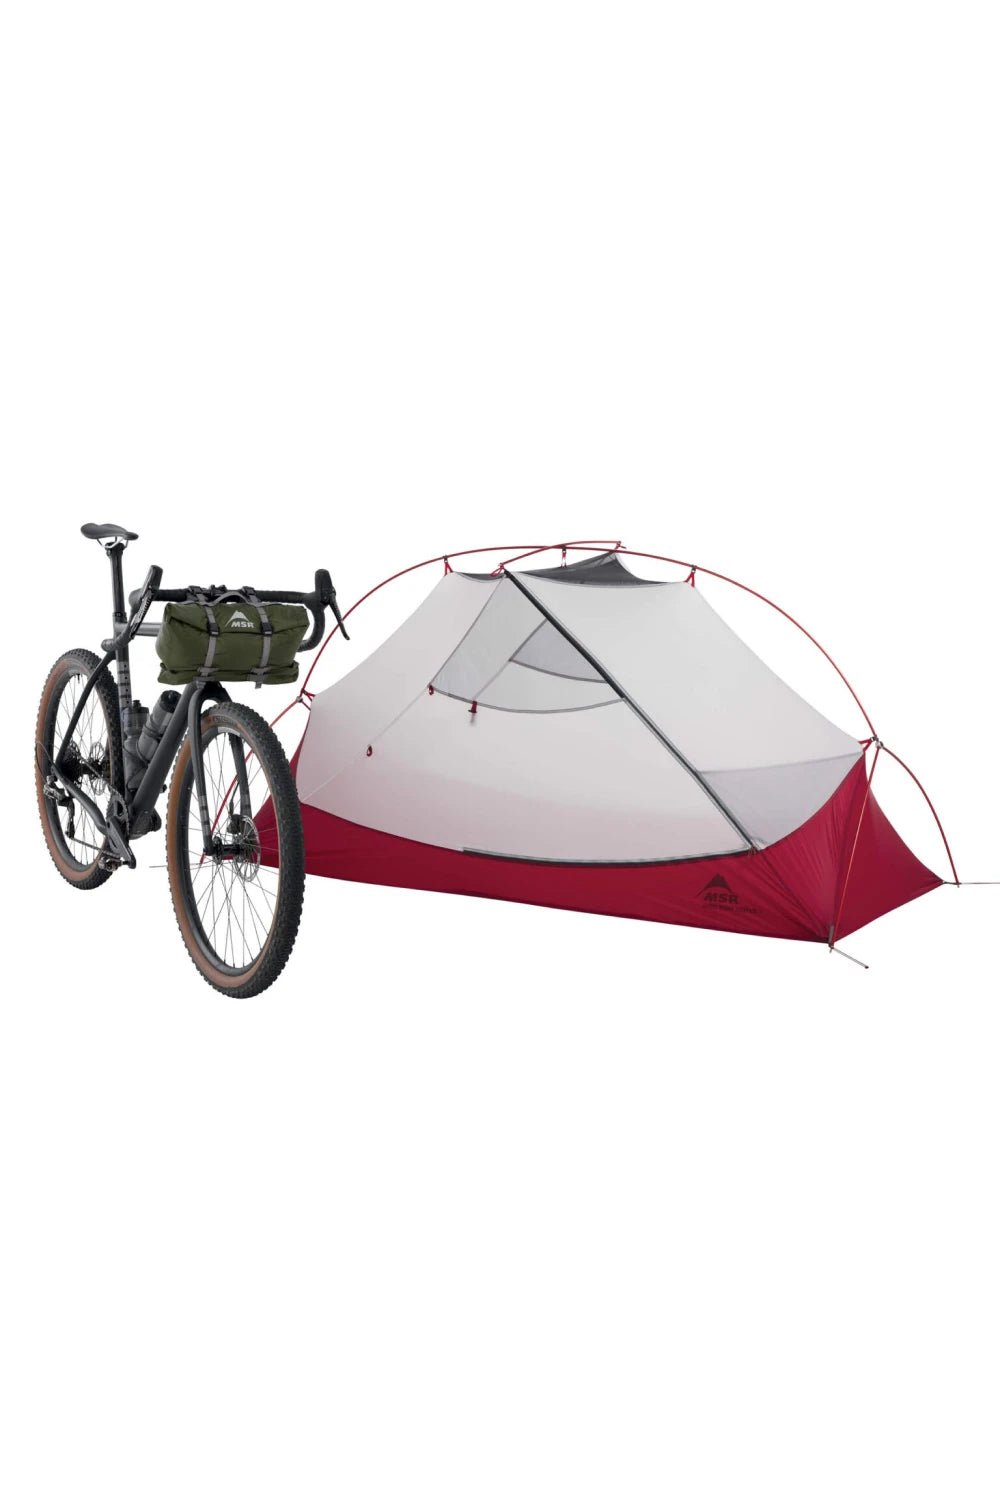 MSR Hubba Hubba Bikepack 1 Tent | Coffee Outdoors